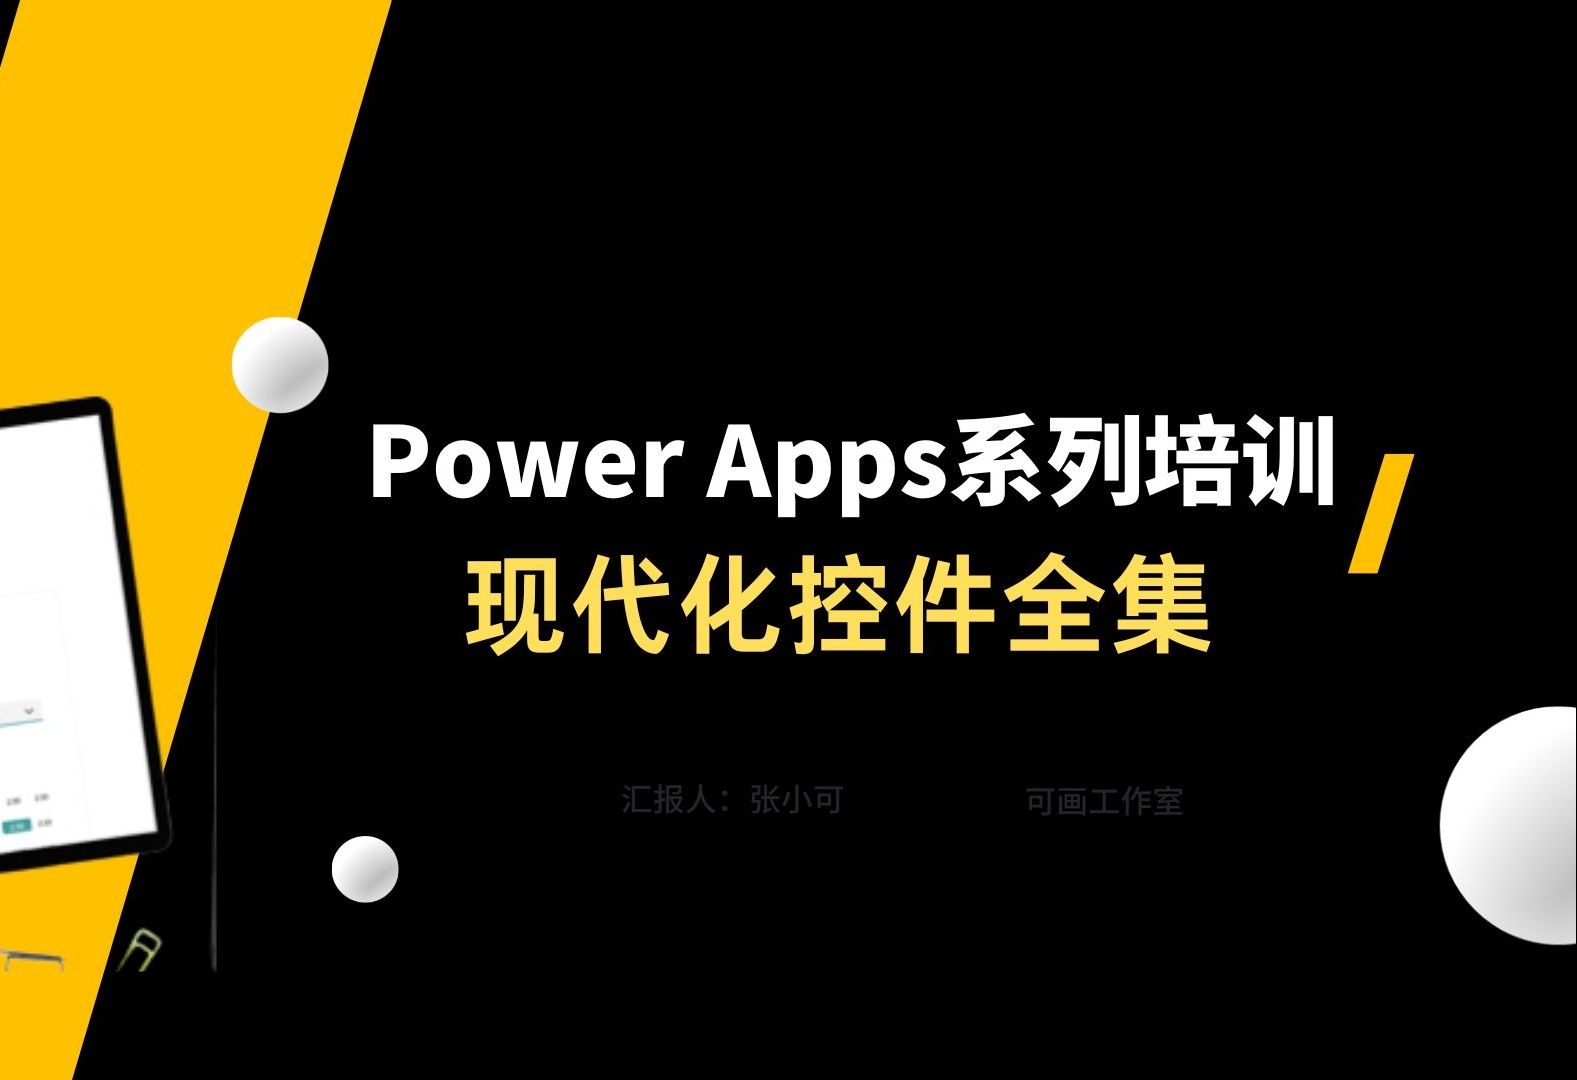 【Power Apps系列培训课程】现代化控件全集-上部